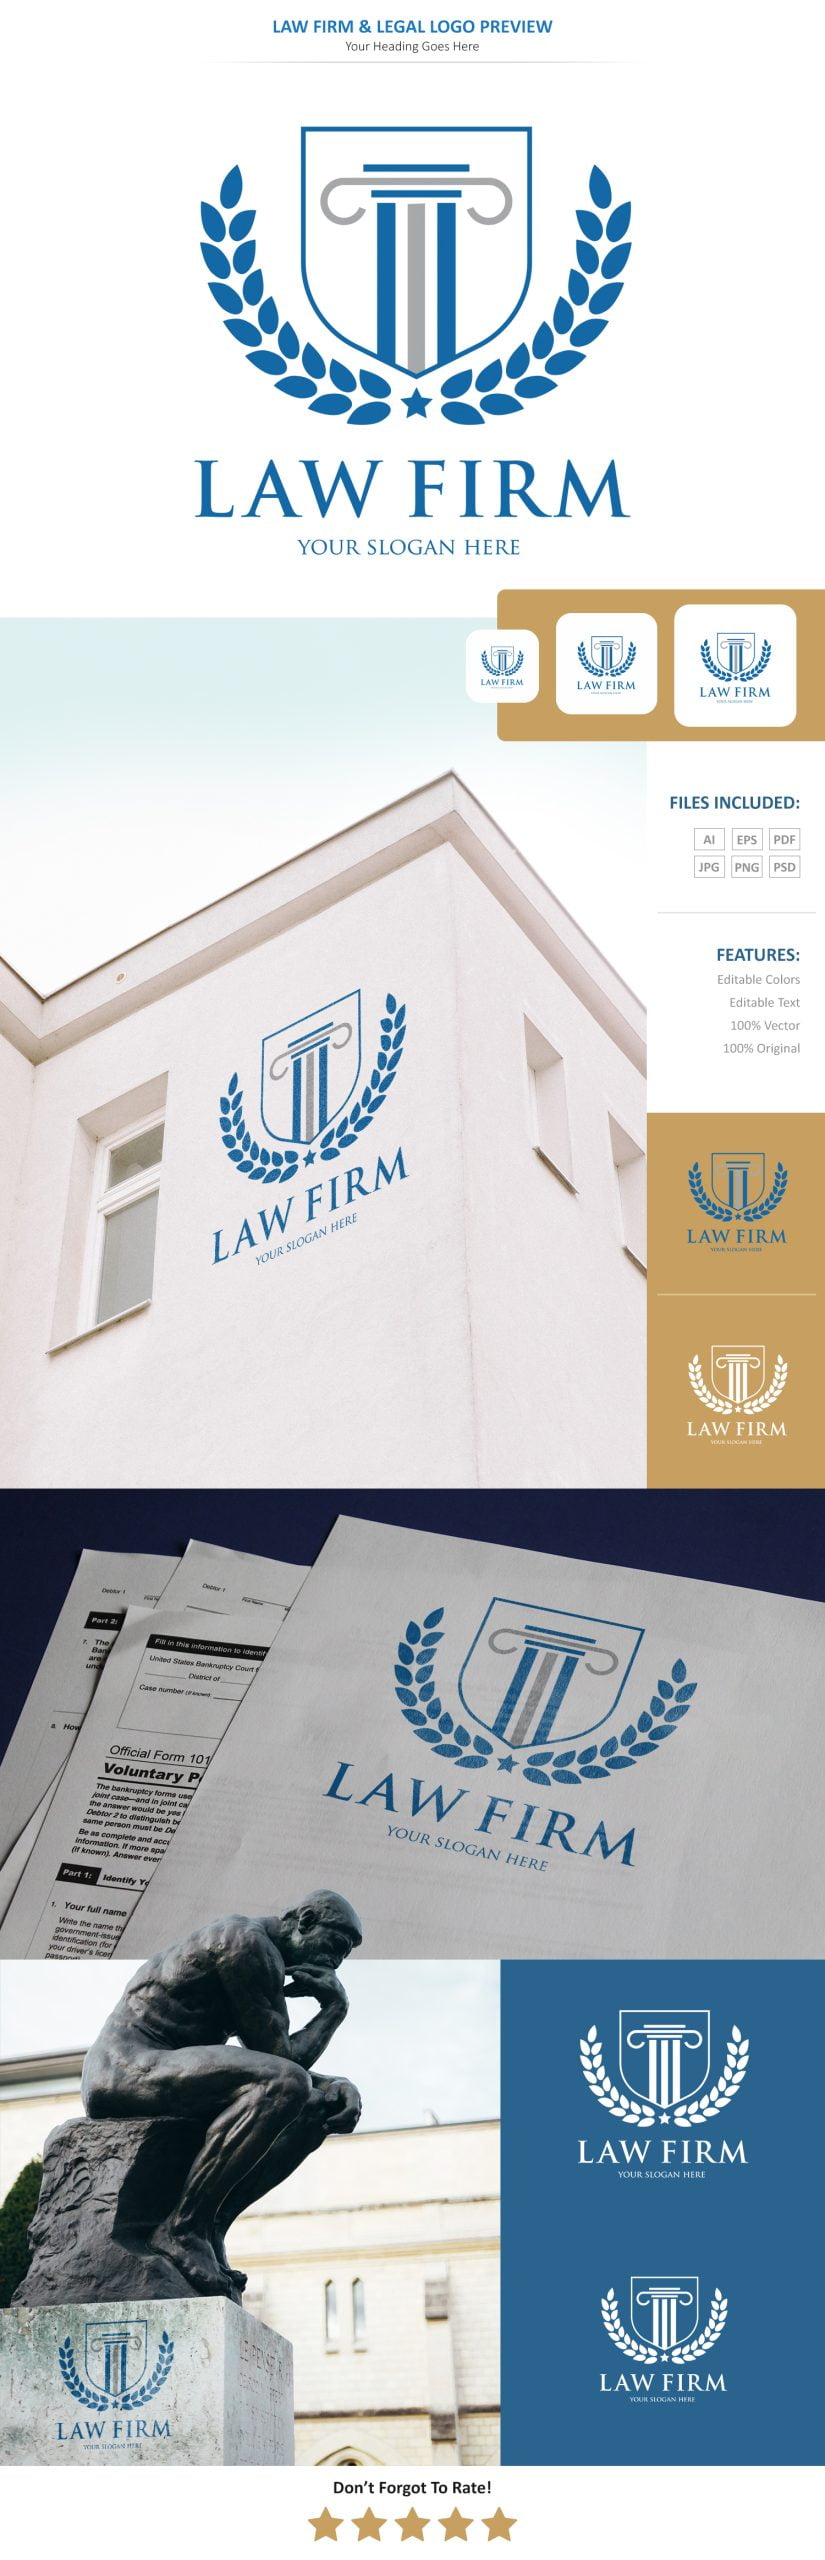 Law Firm & Legal Logo Mockup Kit